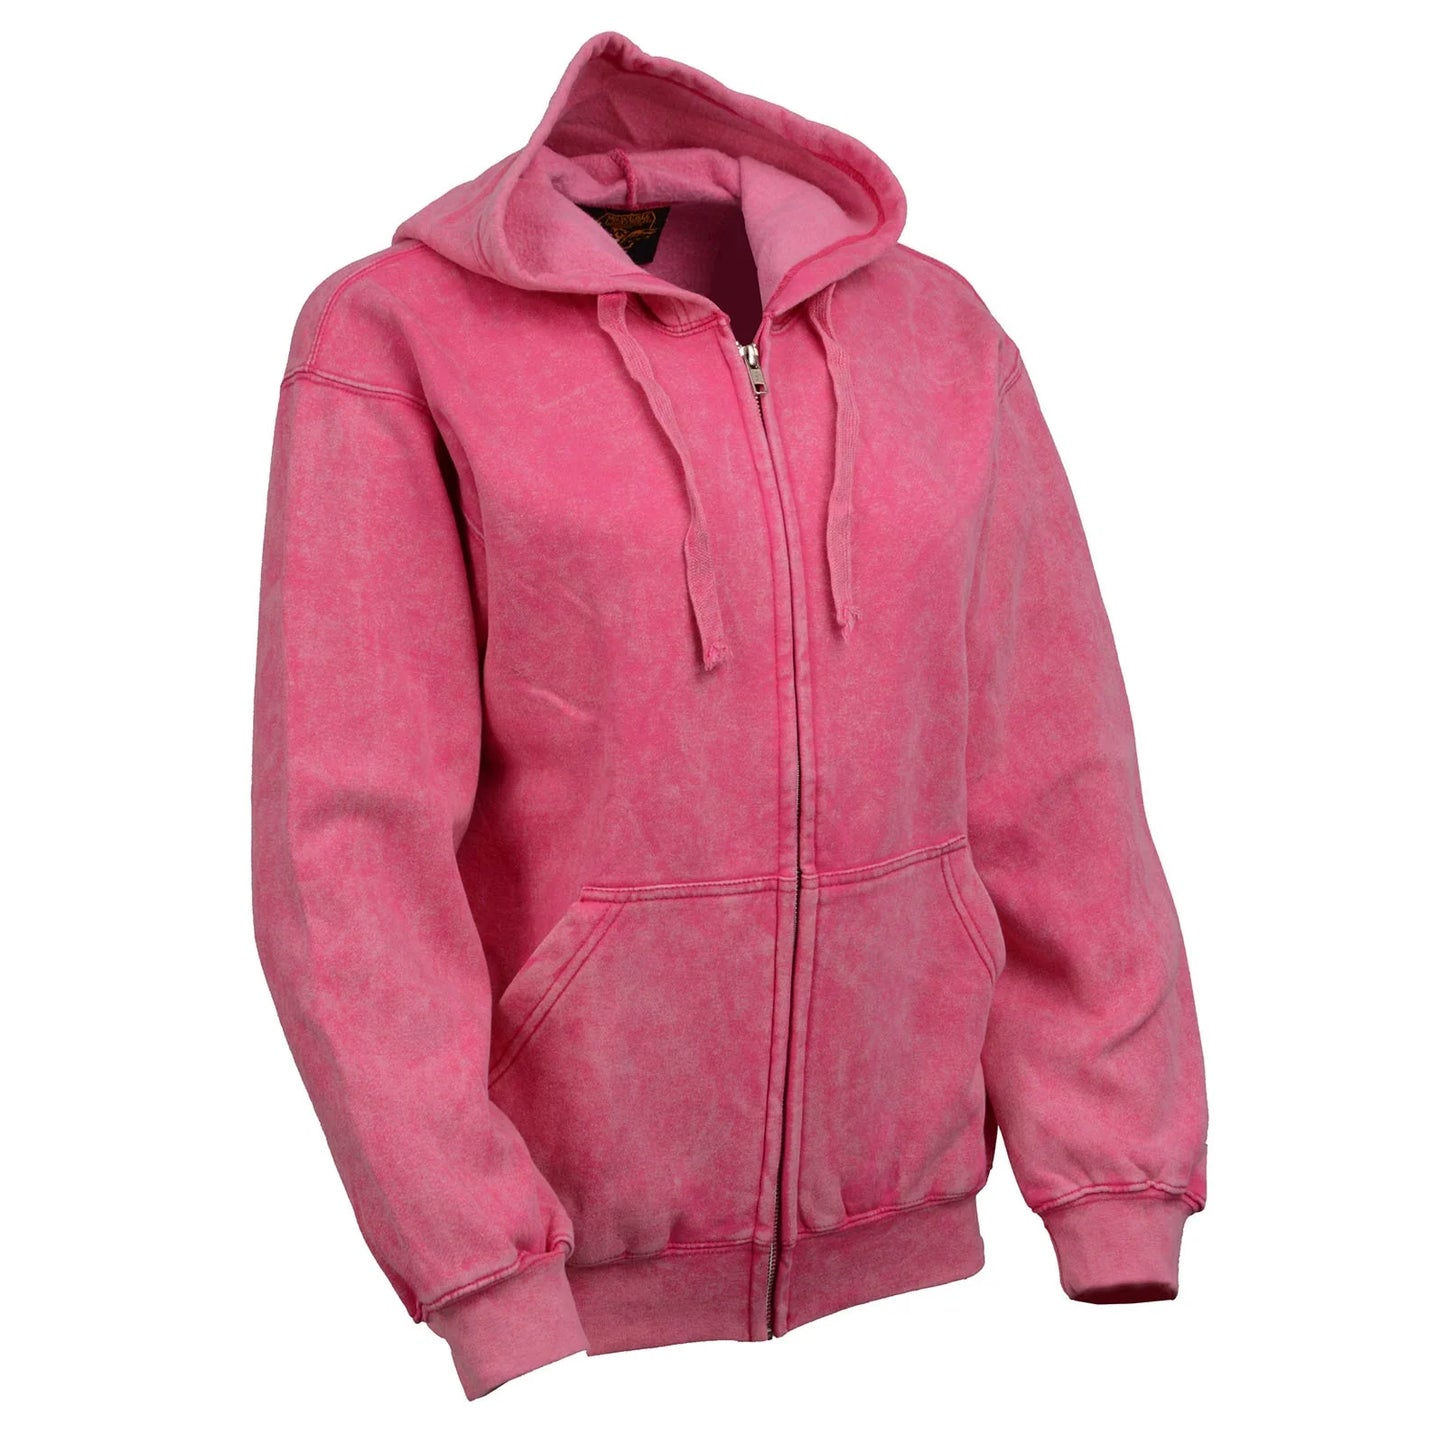 Women's Distressed Pink Sweatshirt Full Zip Up Long Sleeve Casual Hoodie - With Pocket